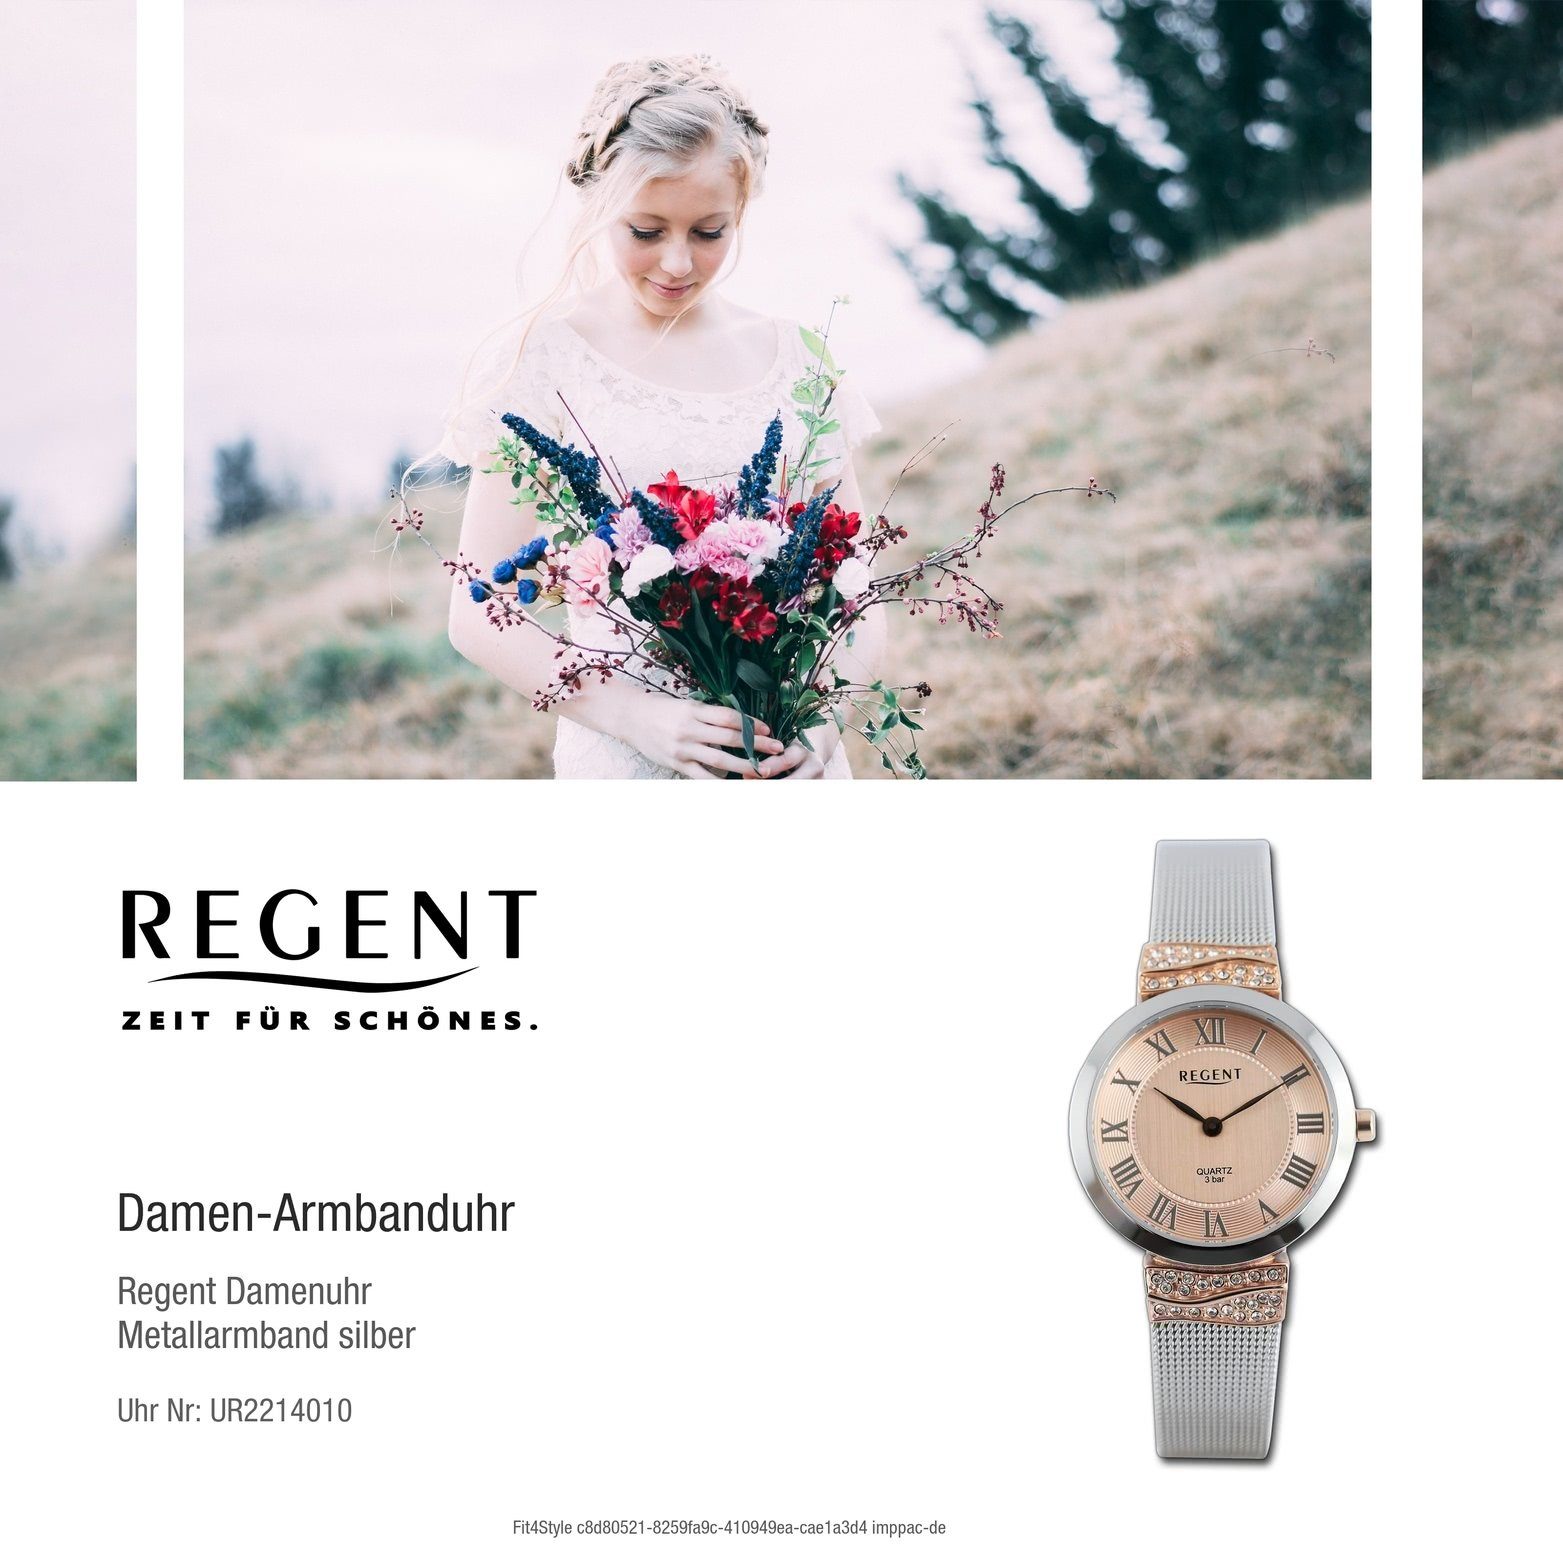 Regent (30mm) Gehäuse, Regent Armbanduhr Metallarmband groß rosegold, Damenuhr Damen rundes Quarzuhr Analog, silber,